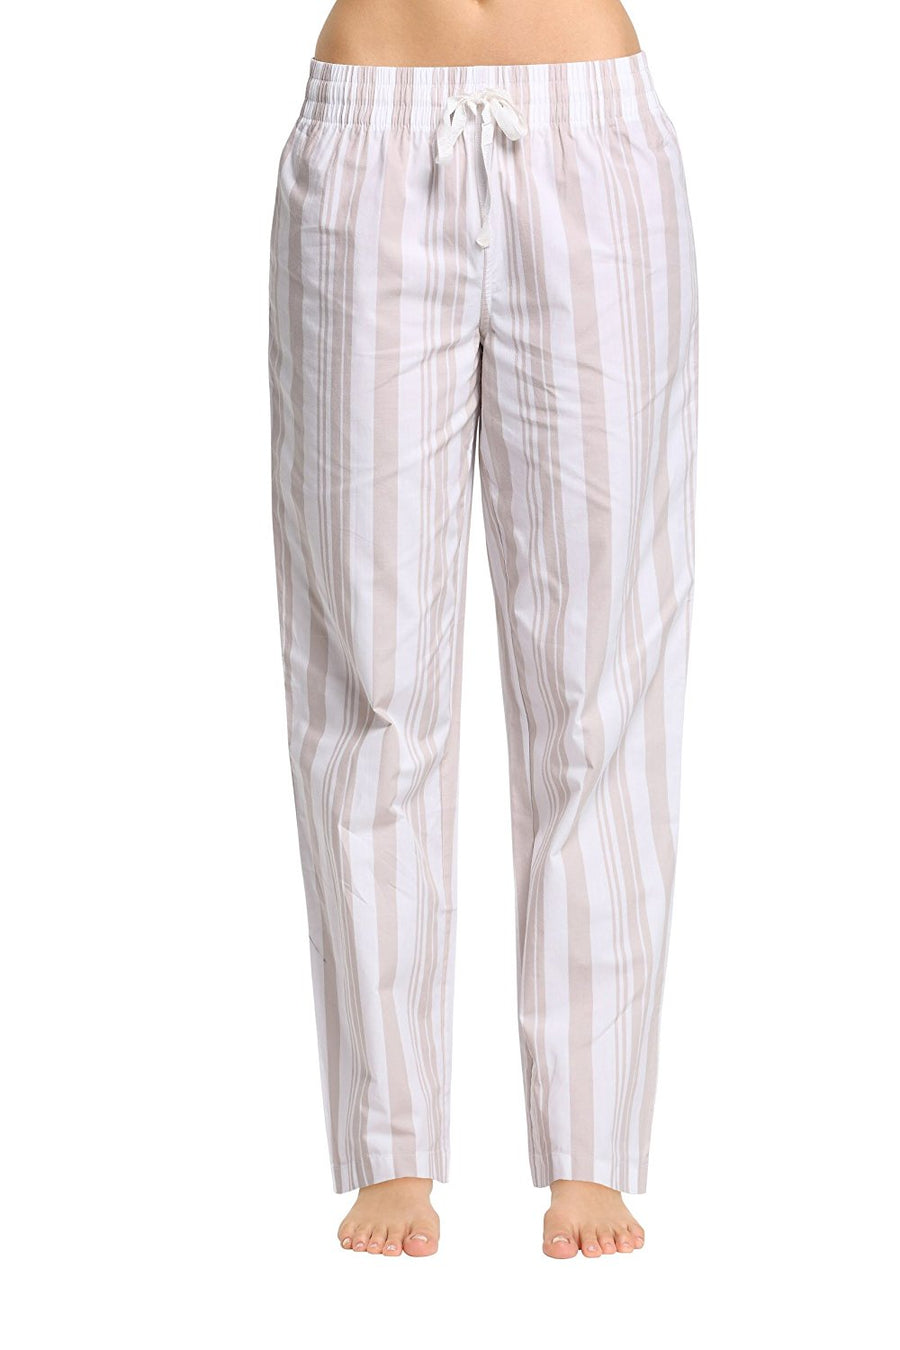 Just Love 100% Cotton Women Pajama Capri Pants Sleepwear, Grey - I Love  Sleep Mask, L price in UAE | Amazon UAE | kanbkam